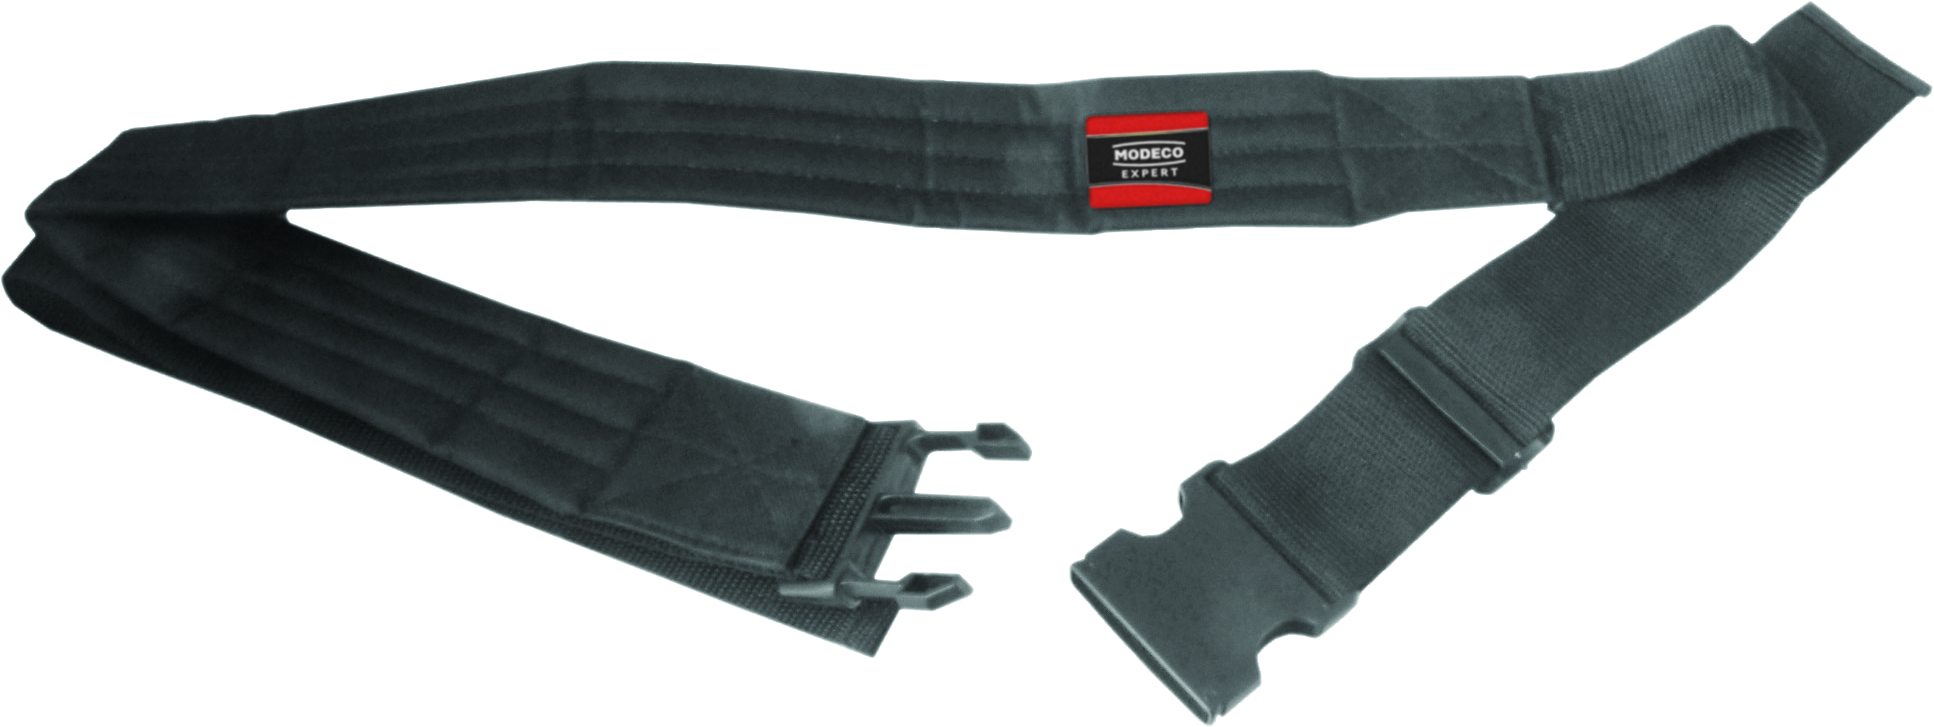 MN-03-401 Tool belt